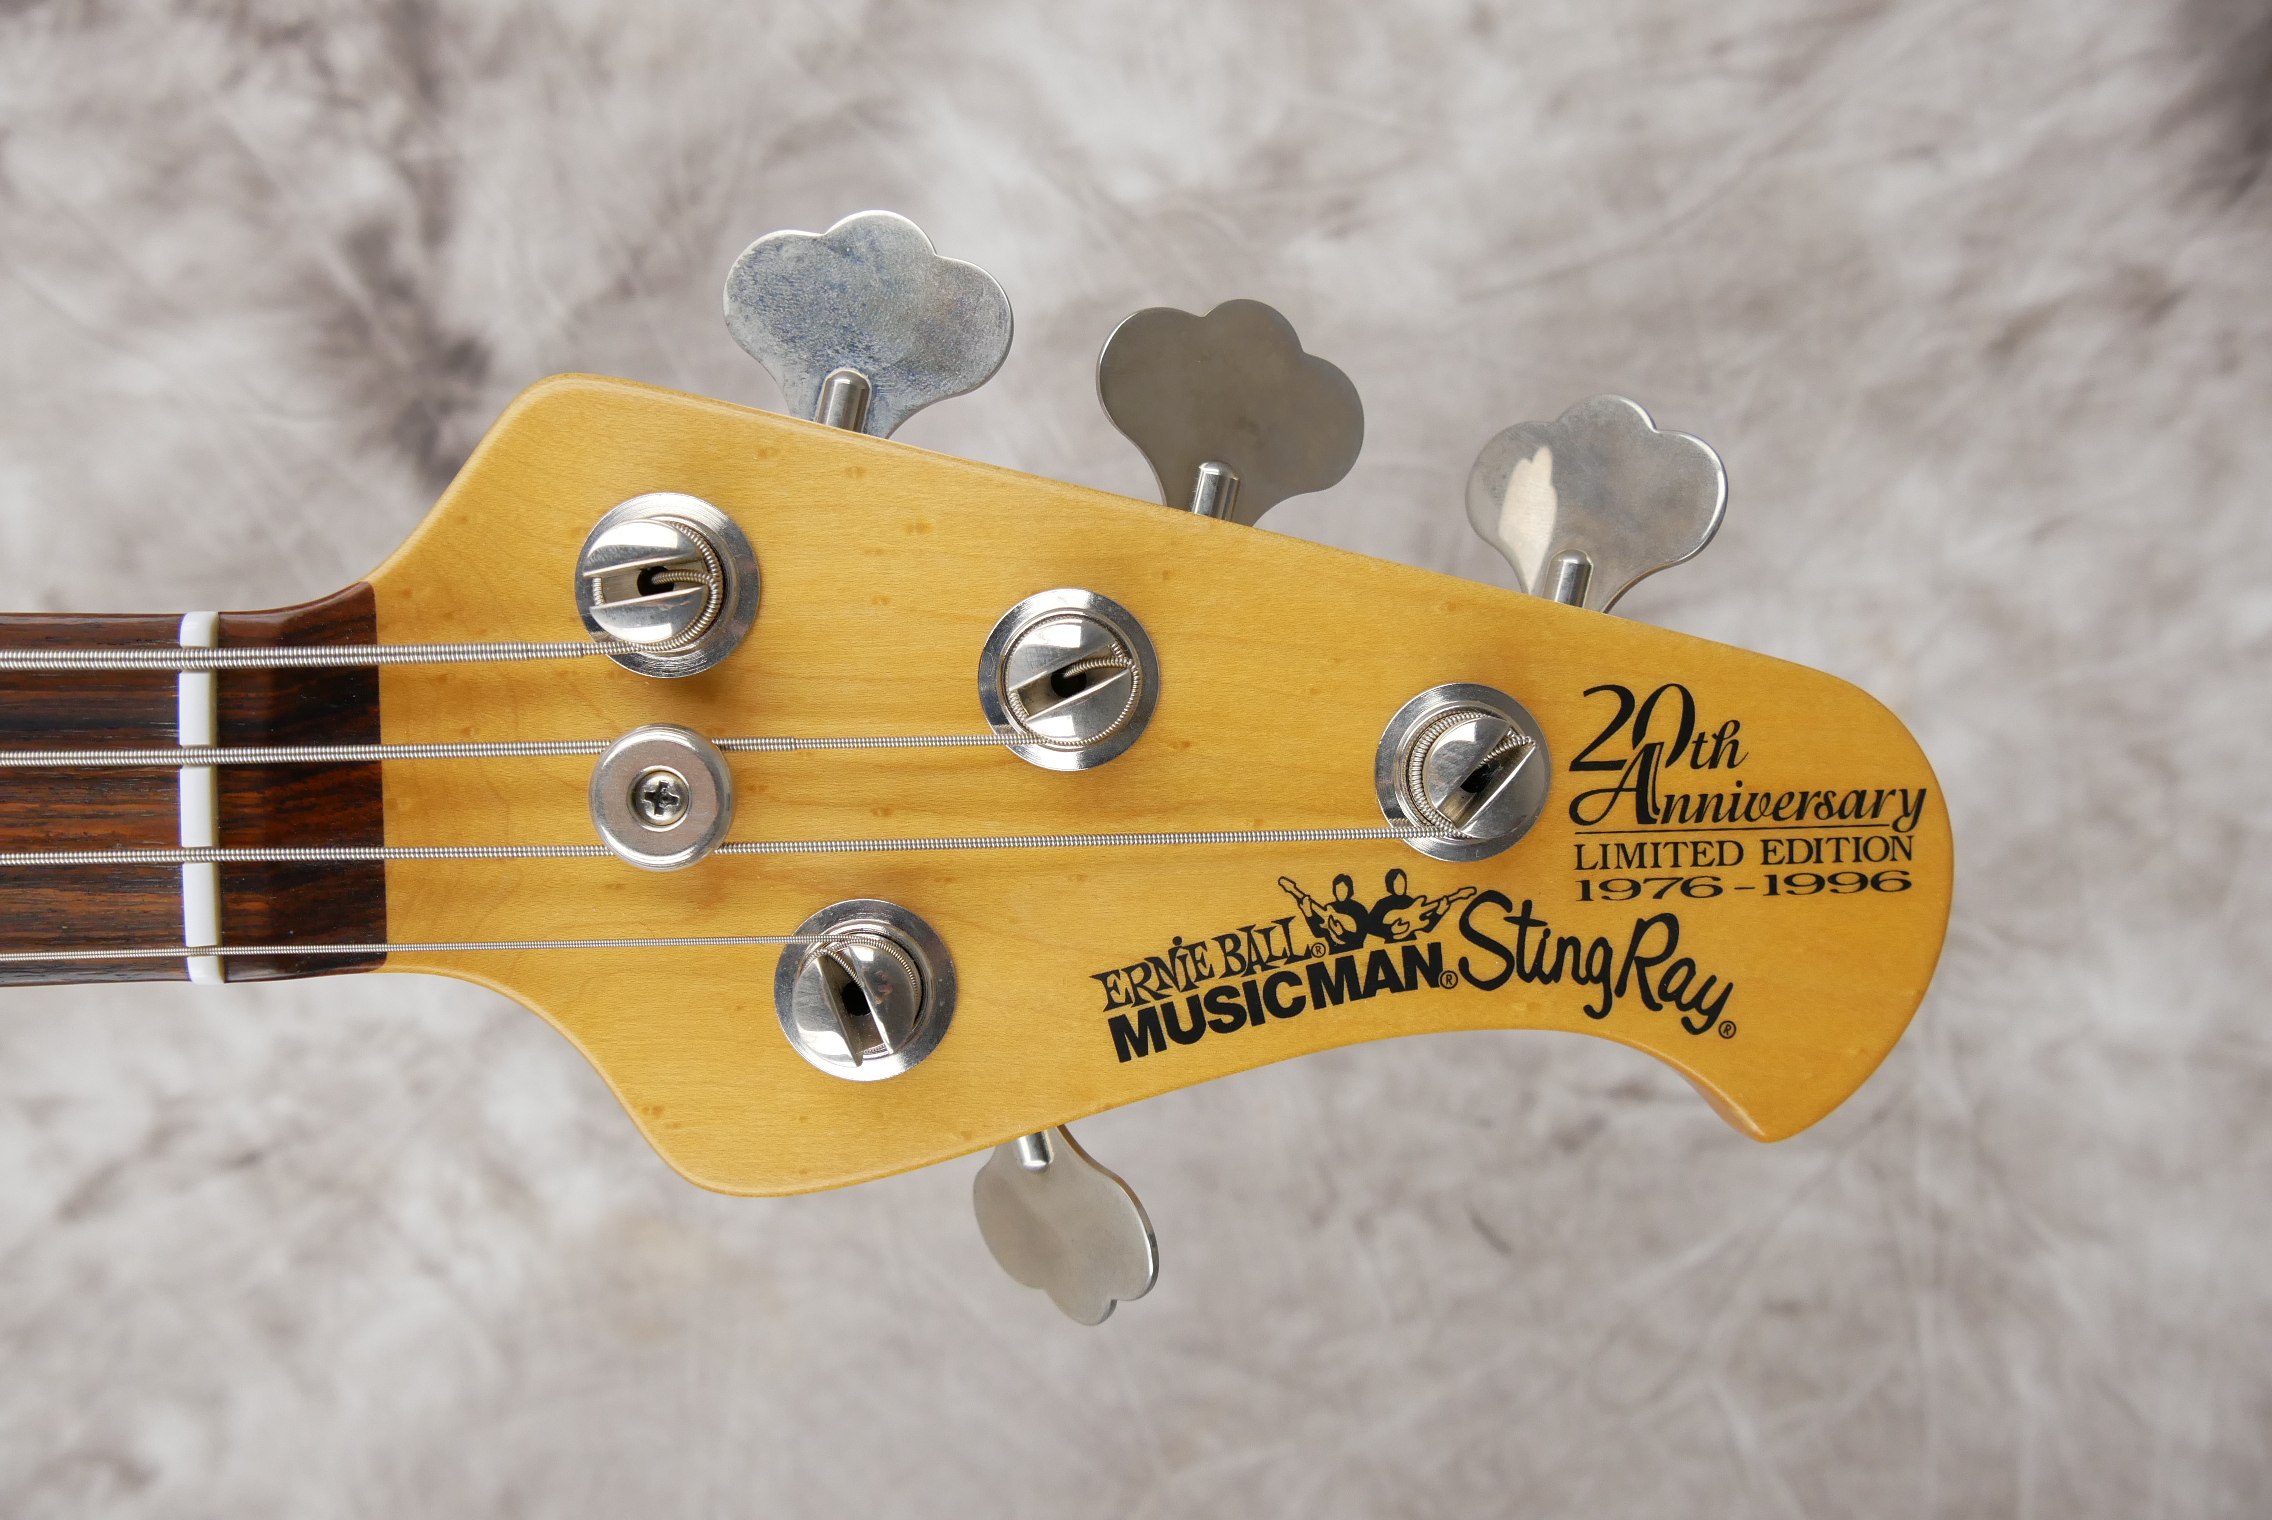 img/vintage/4617/Musicman-Stingray-20th-Anniversary-limited-edition-009.JPG